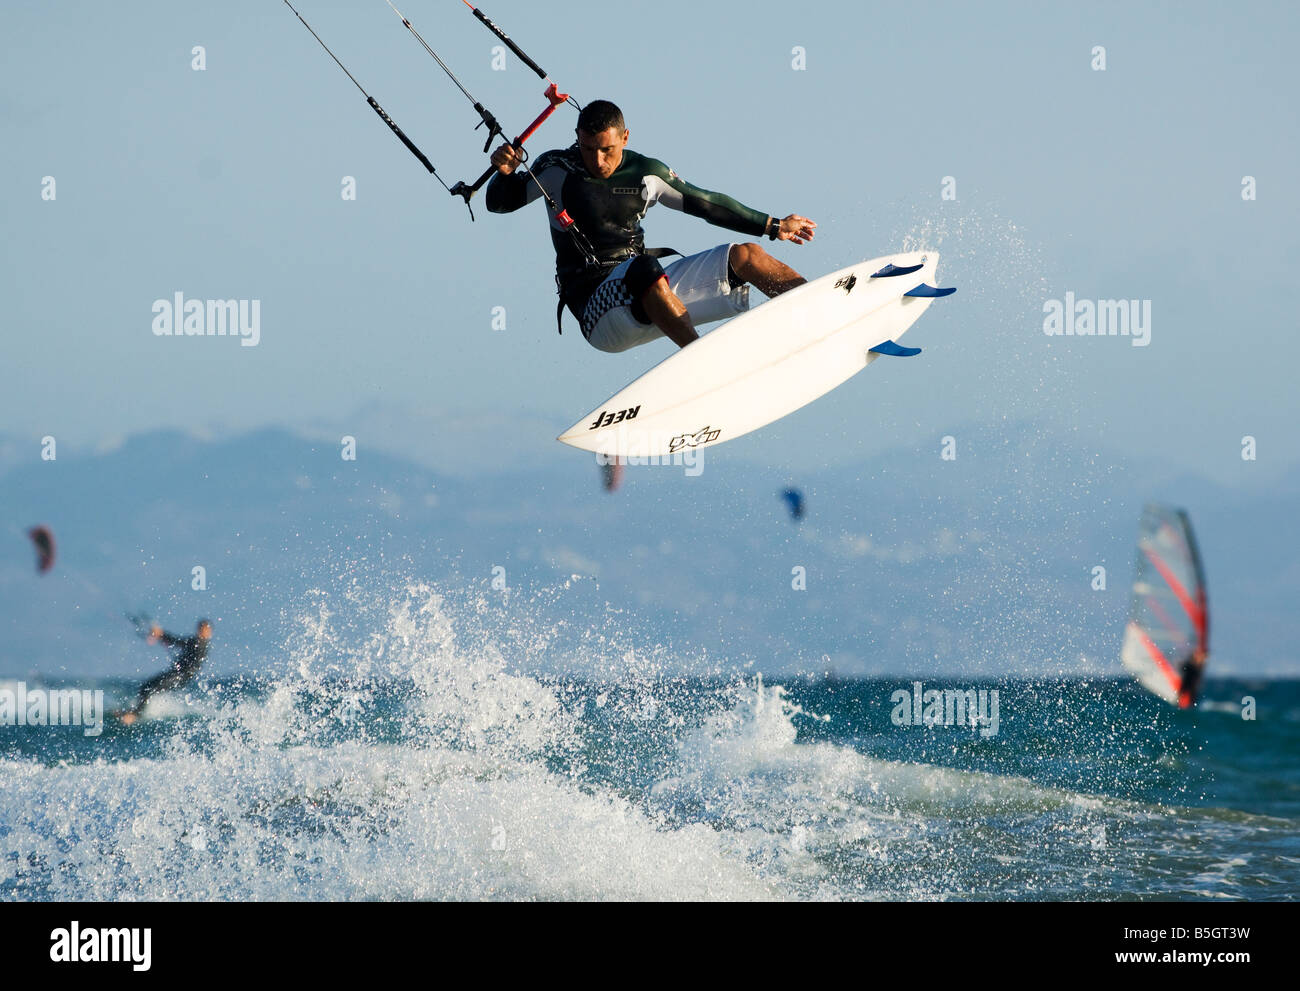 a kitesurfer in action Stock Photo